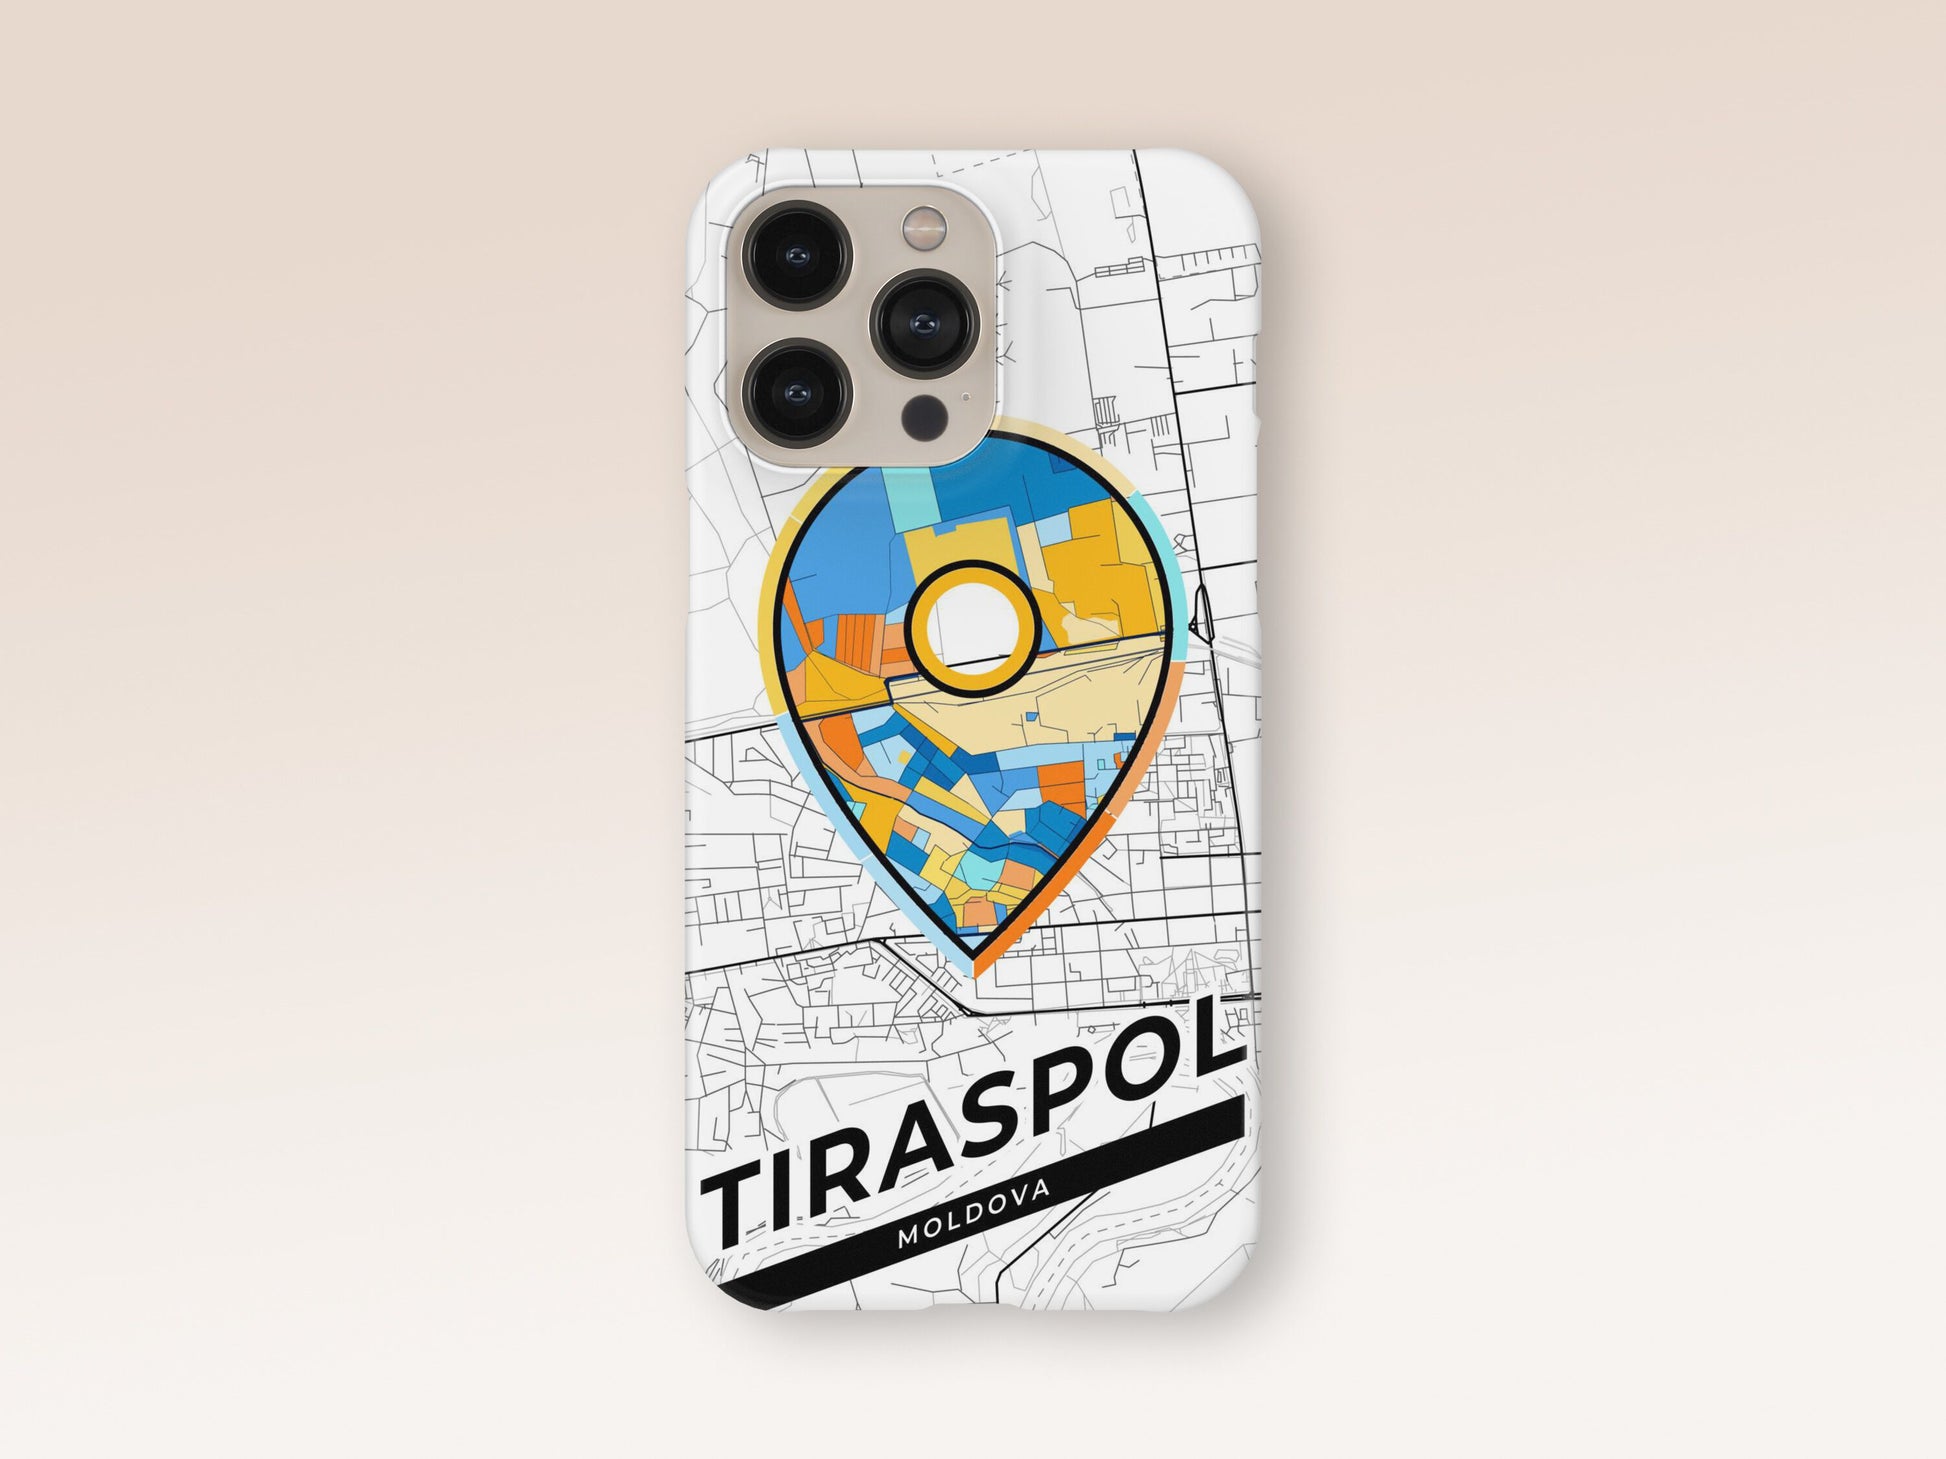 Tiraspol Moldova slim phone case with colorful icon 1